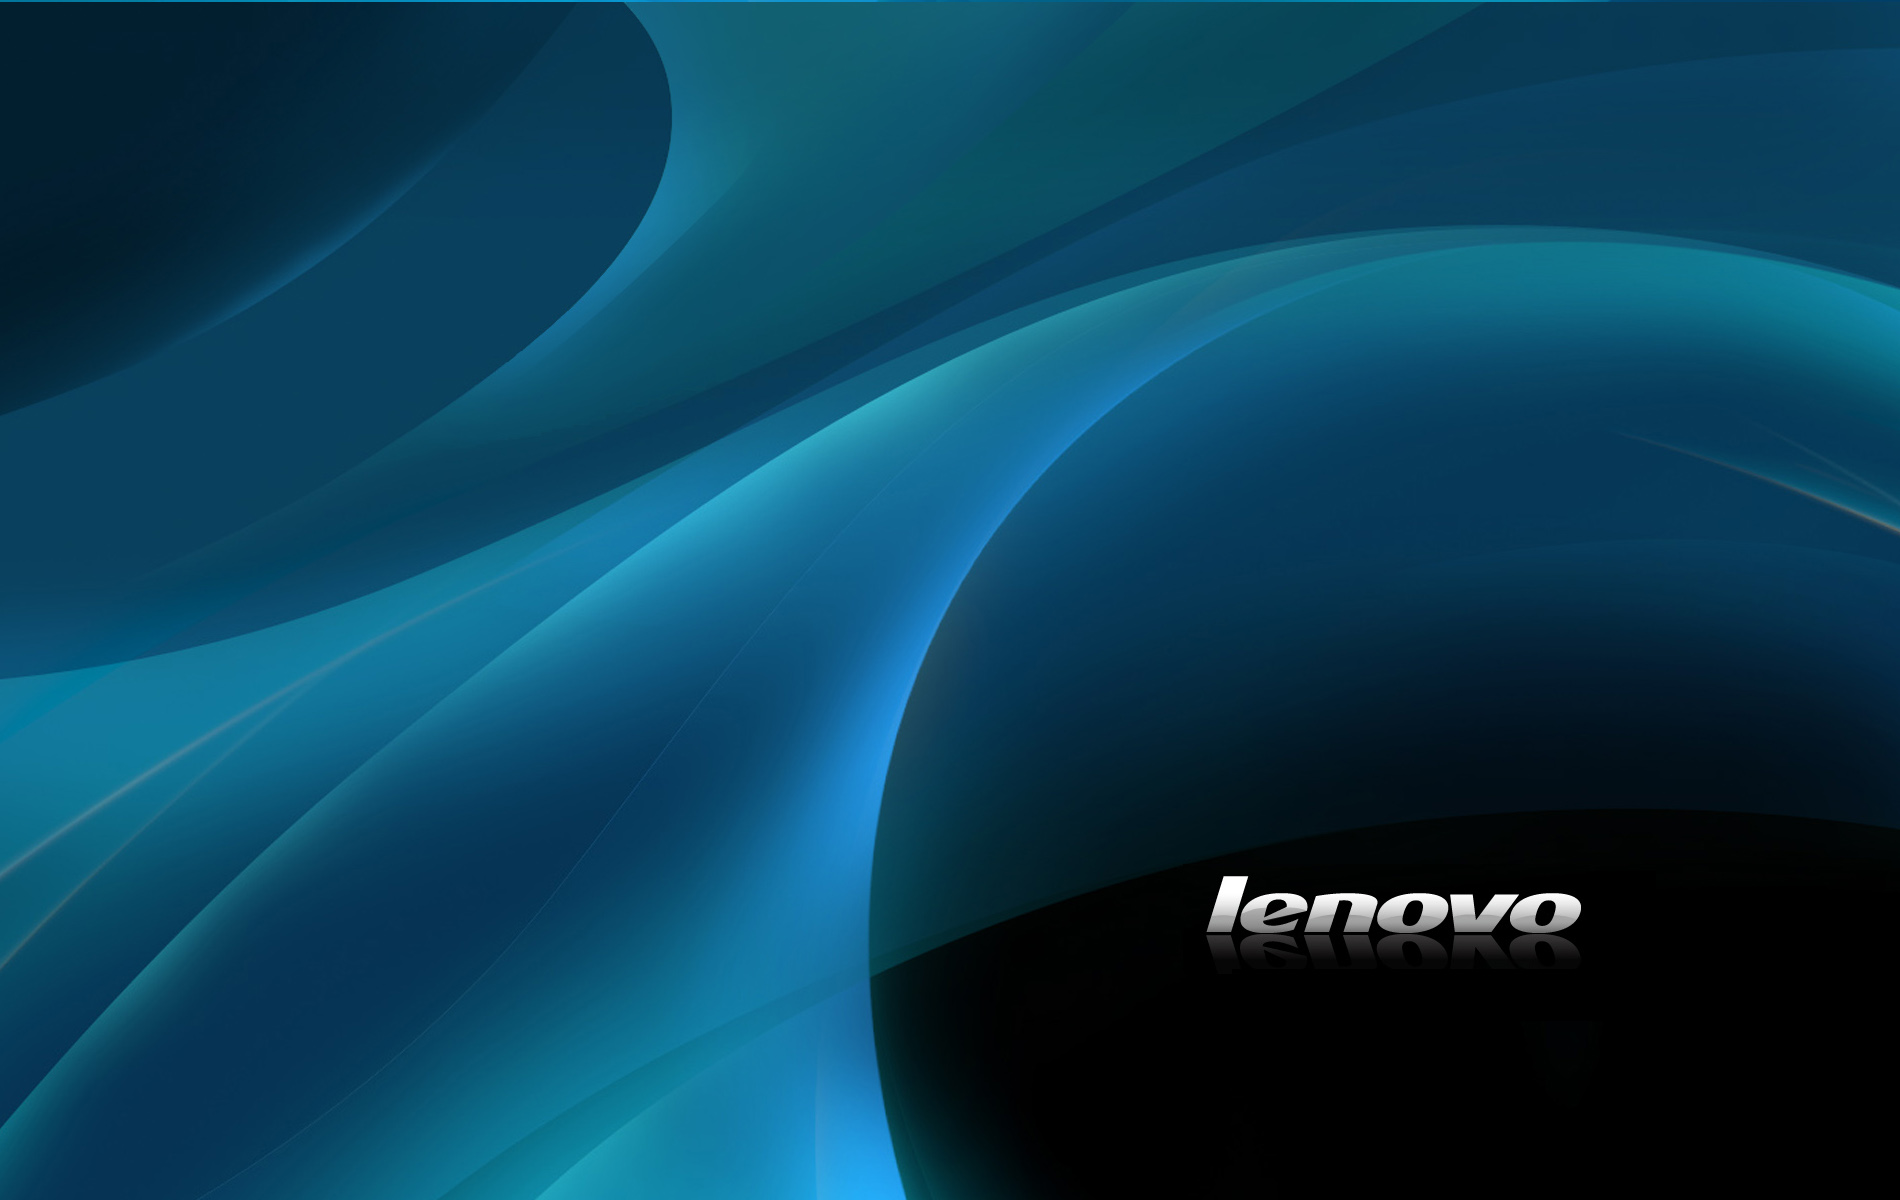 Official Lenovo Wallpaper - WallpaperSafari